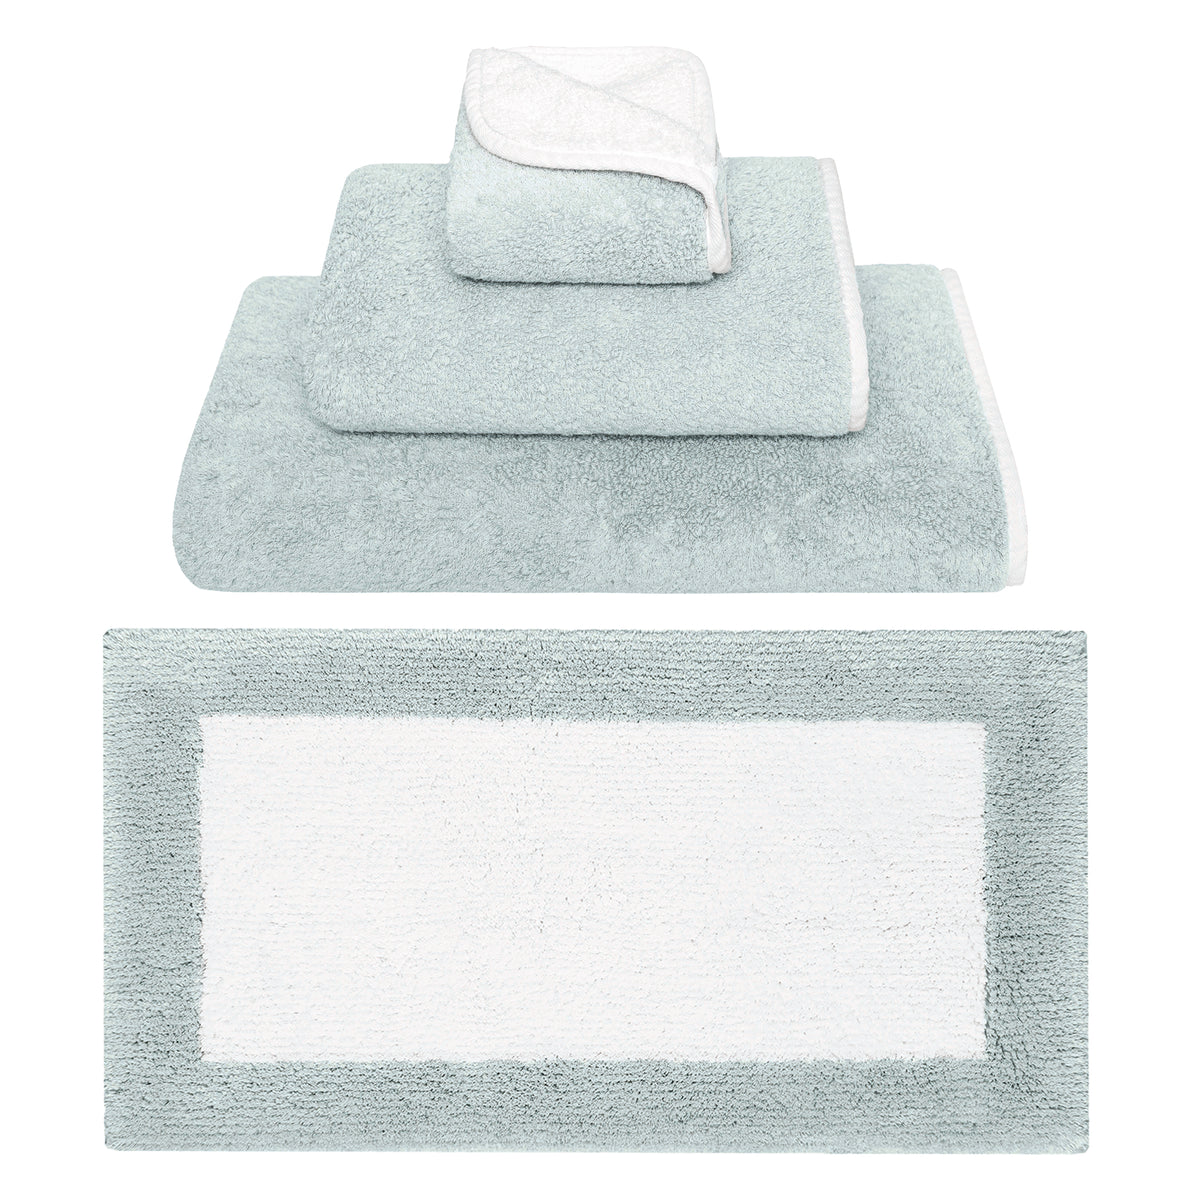 Clear Image of Graccioza Bicolore Bath Towels and Rugs in Sea Mist/White